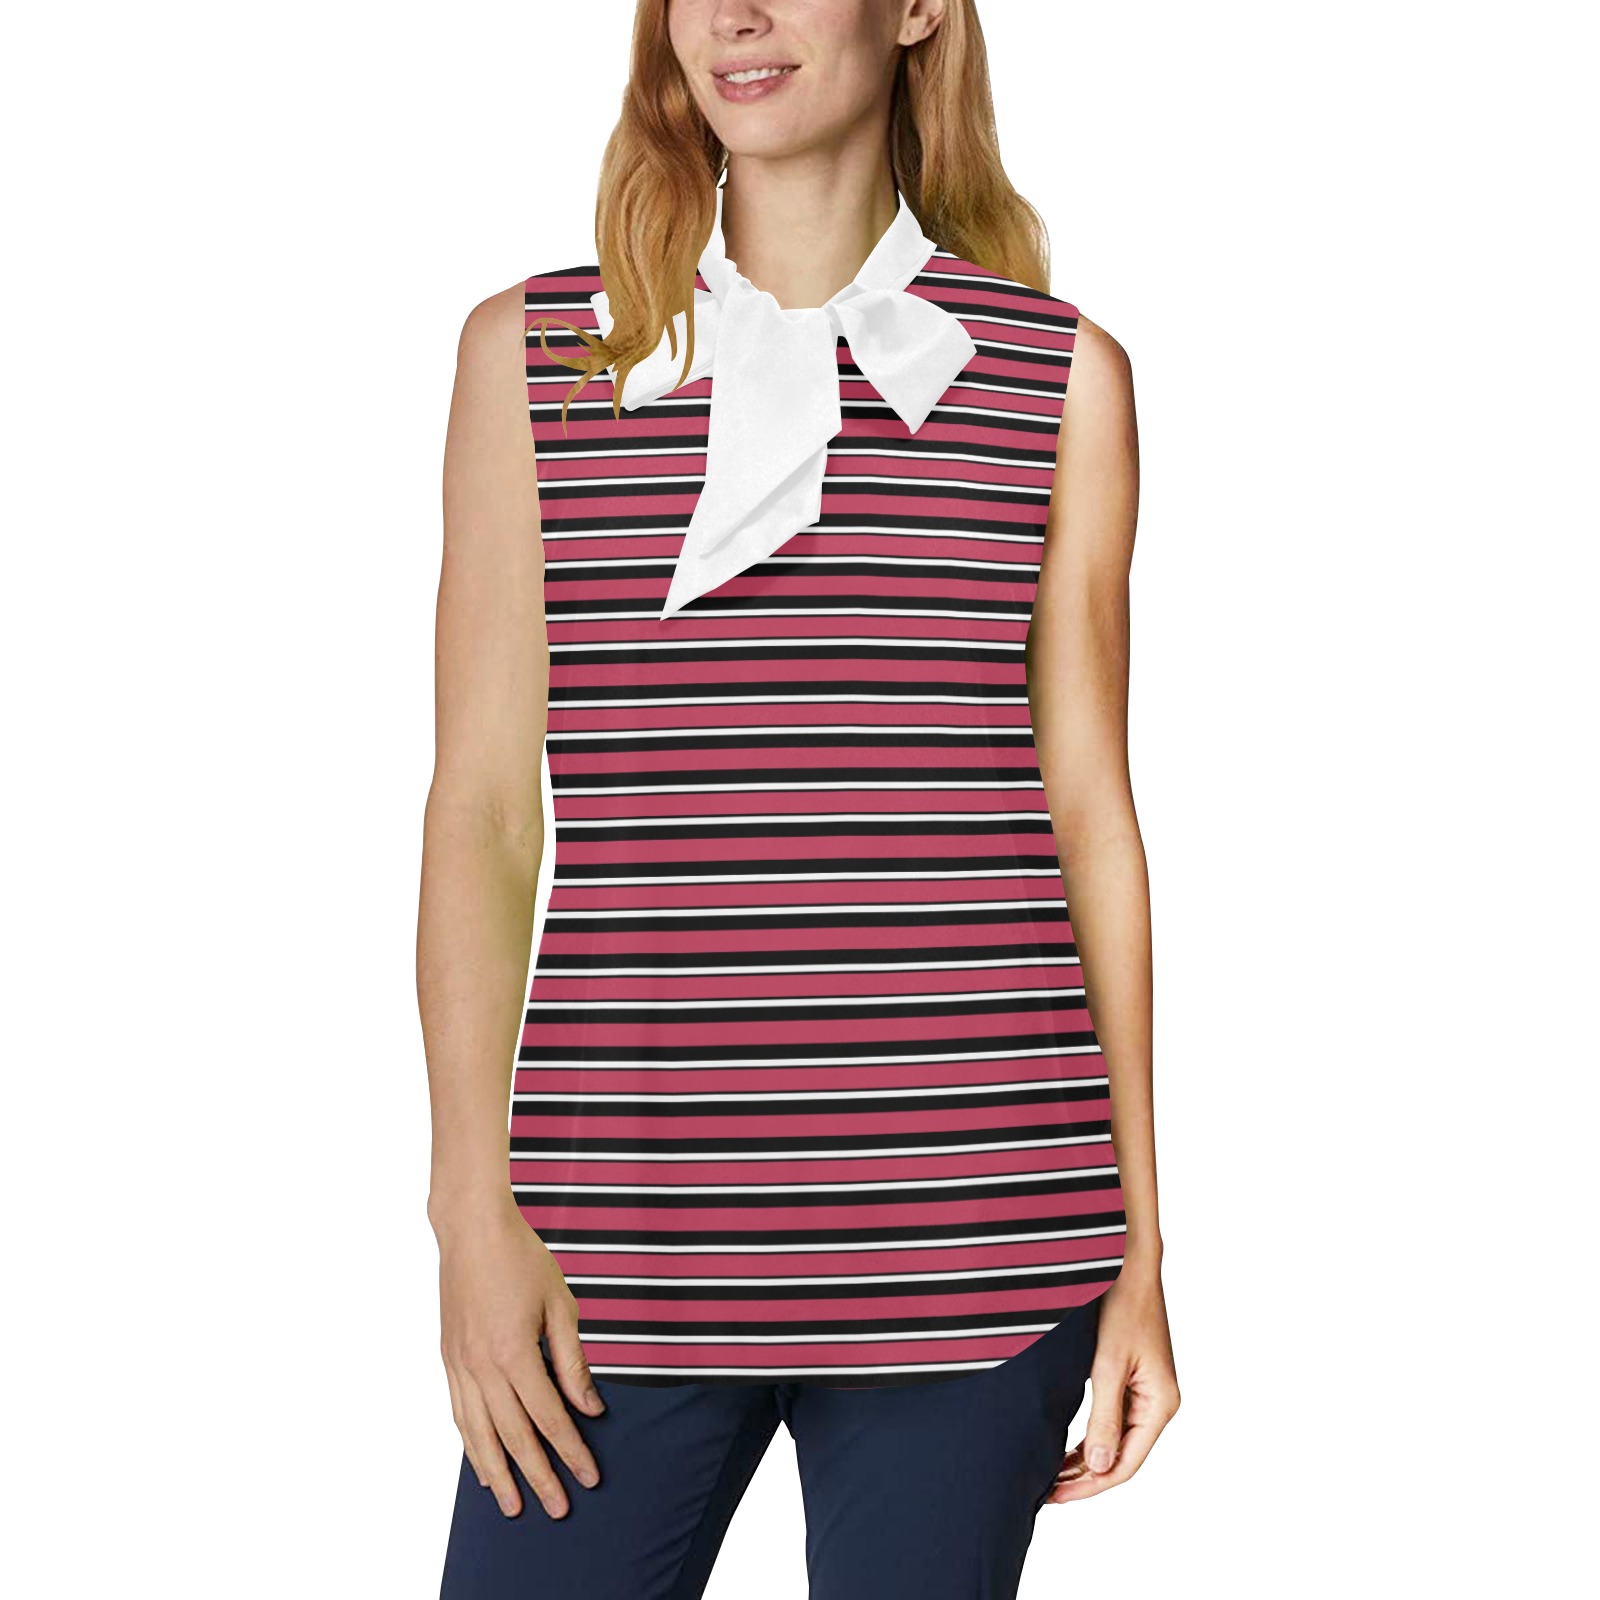 Magenta, Black and White Stripes Women's Bow Tie V-Neck Sleeveless Shirt (Model T69)